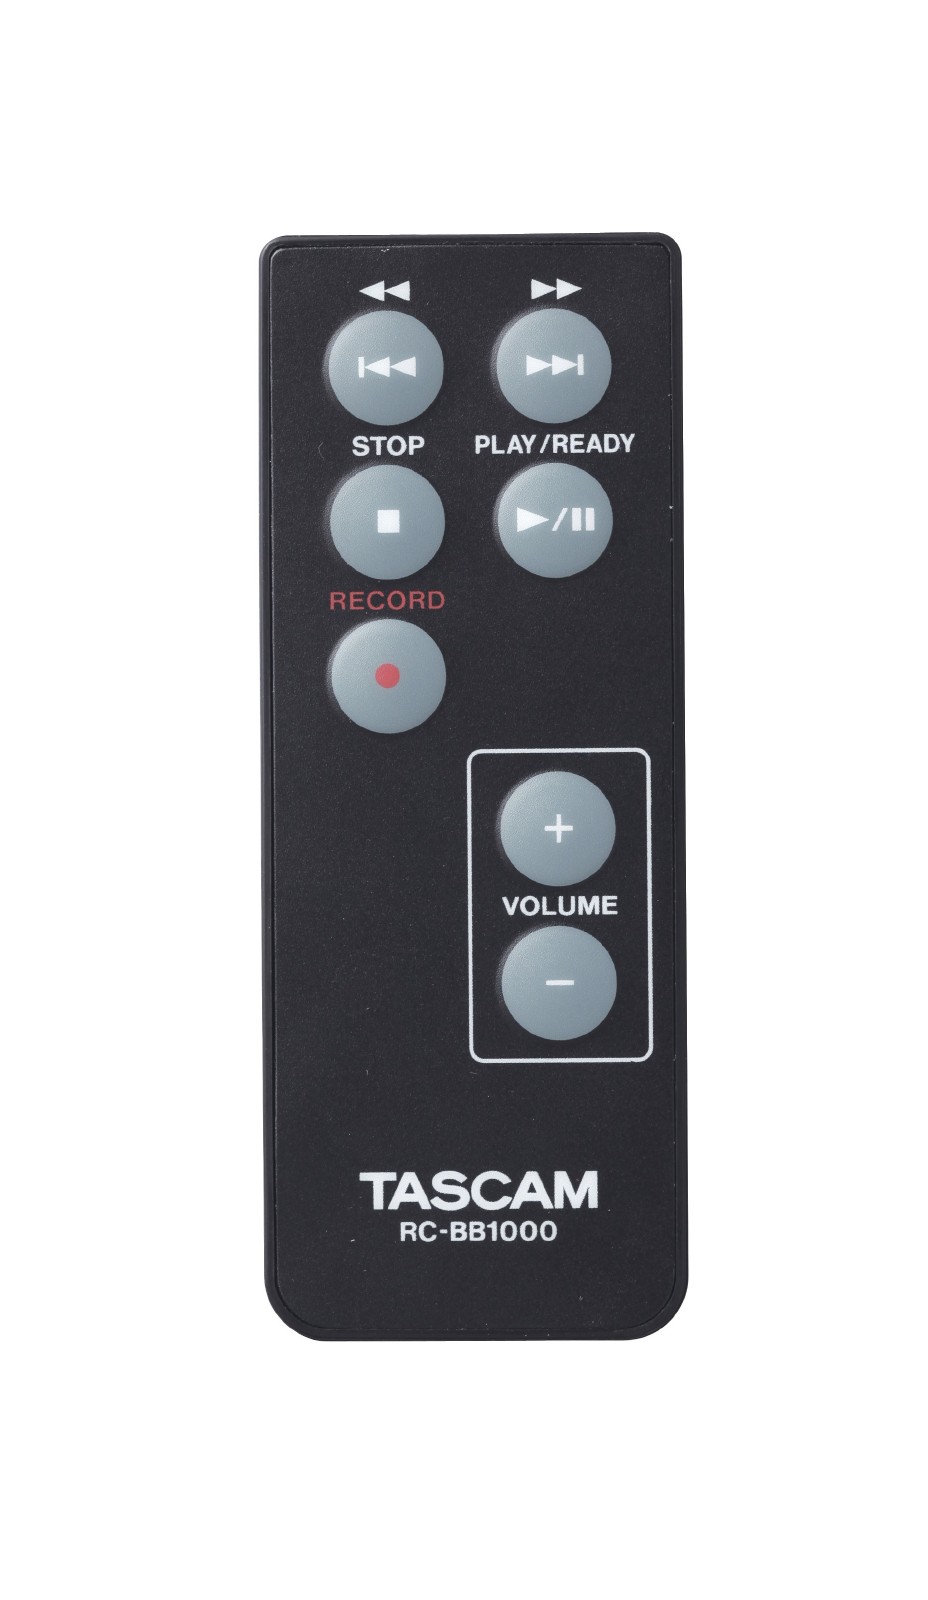 BB-1000CD | Portable CD / SD Recorder | TASCAM - United States